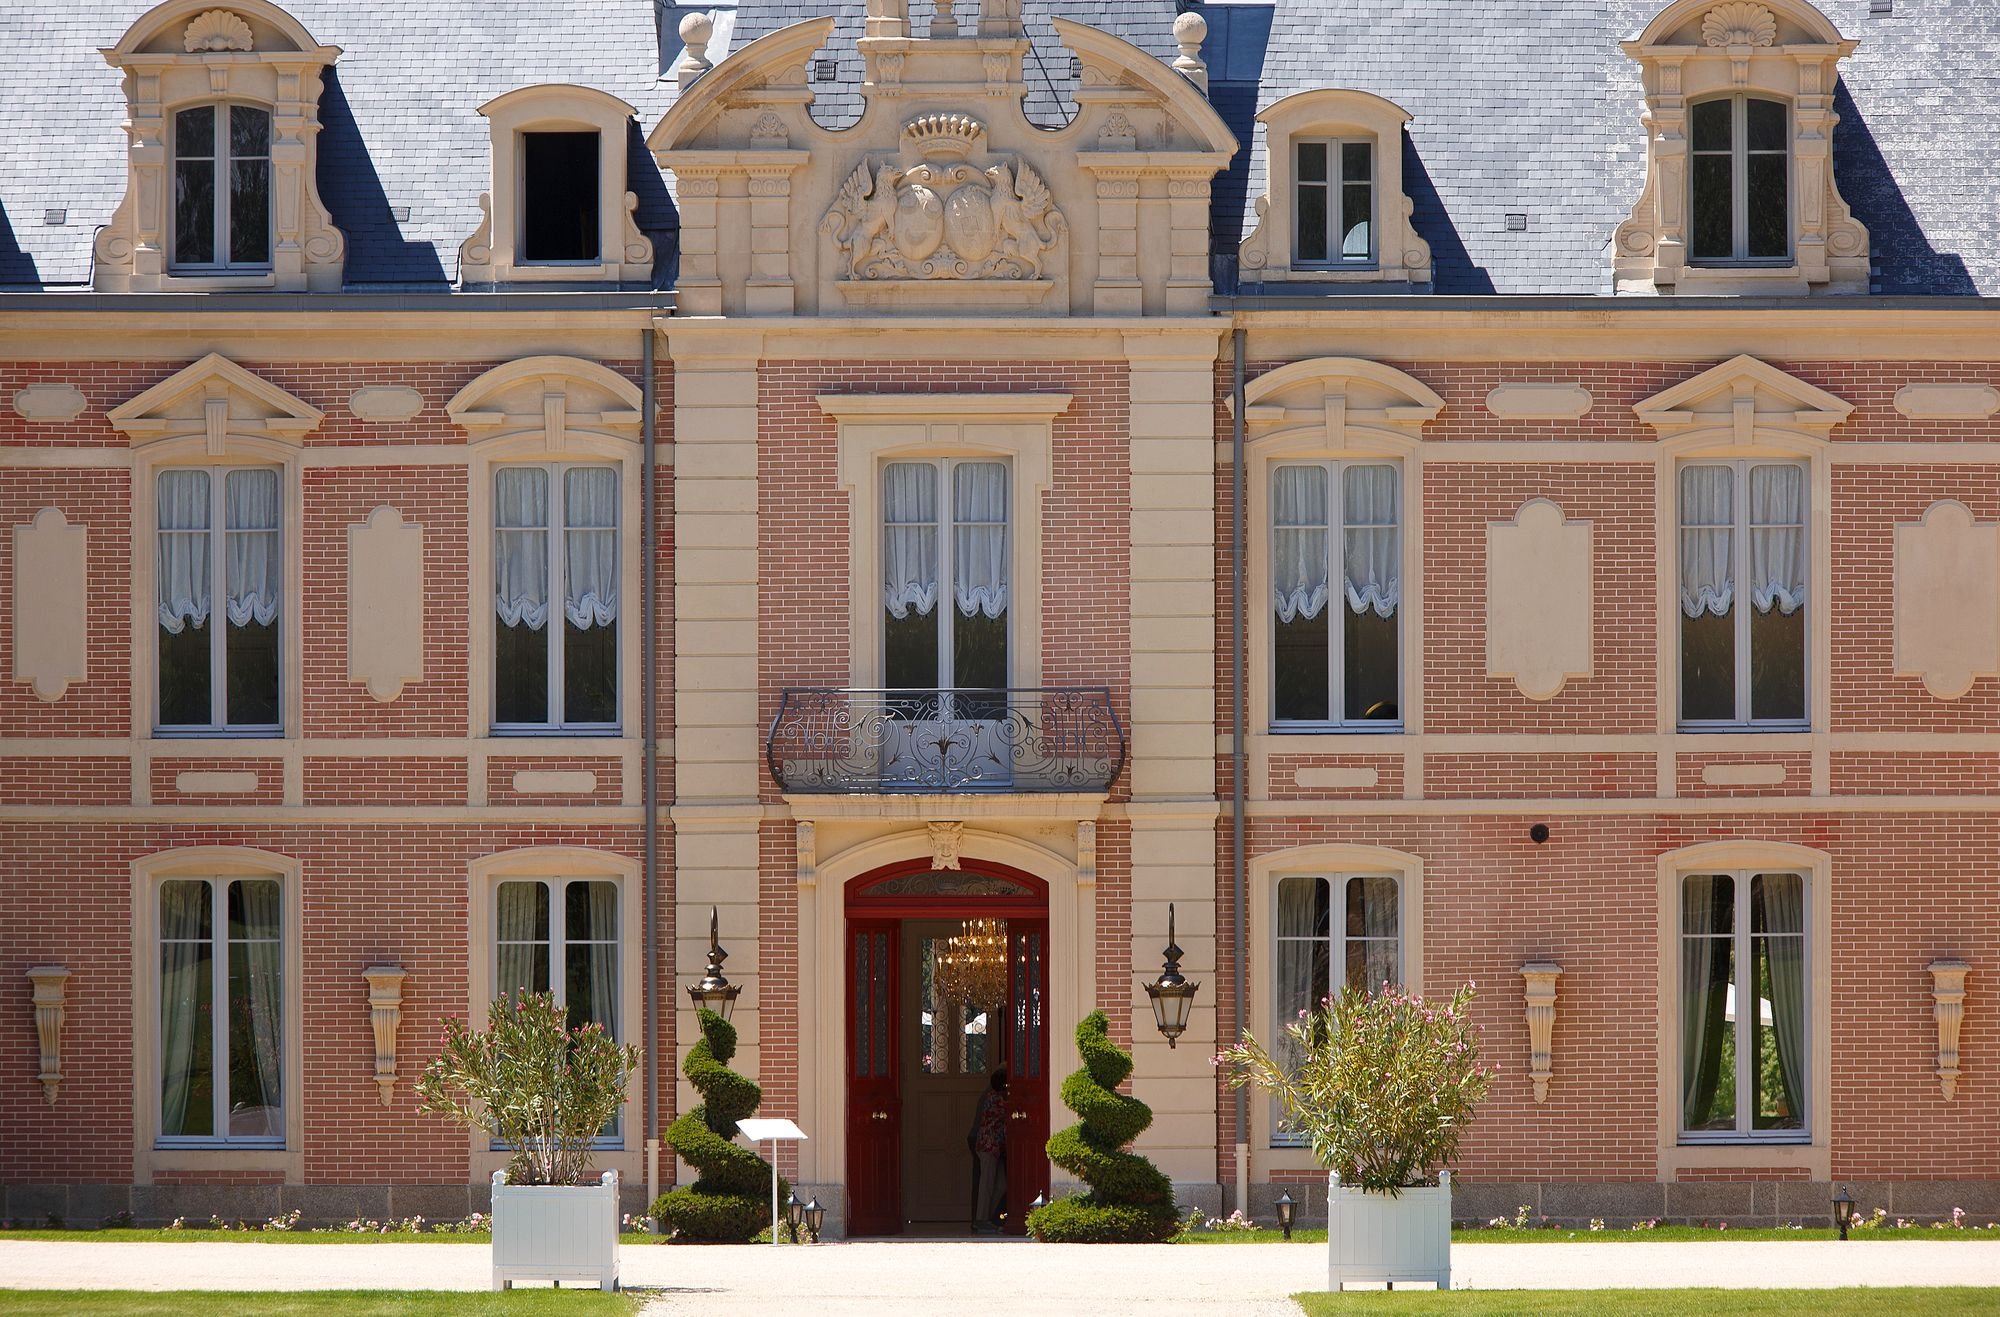 Séjour gourmet | Hôtel Alexandra Palace - Marais Poitevin - France